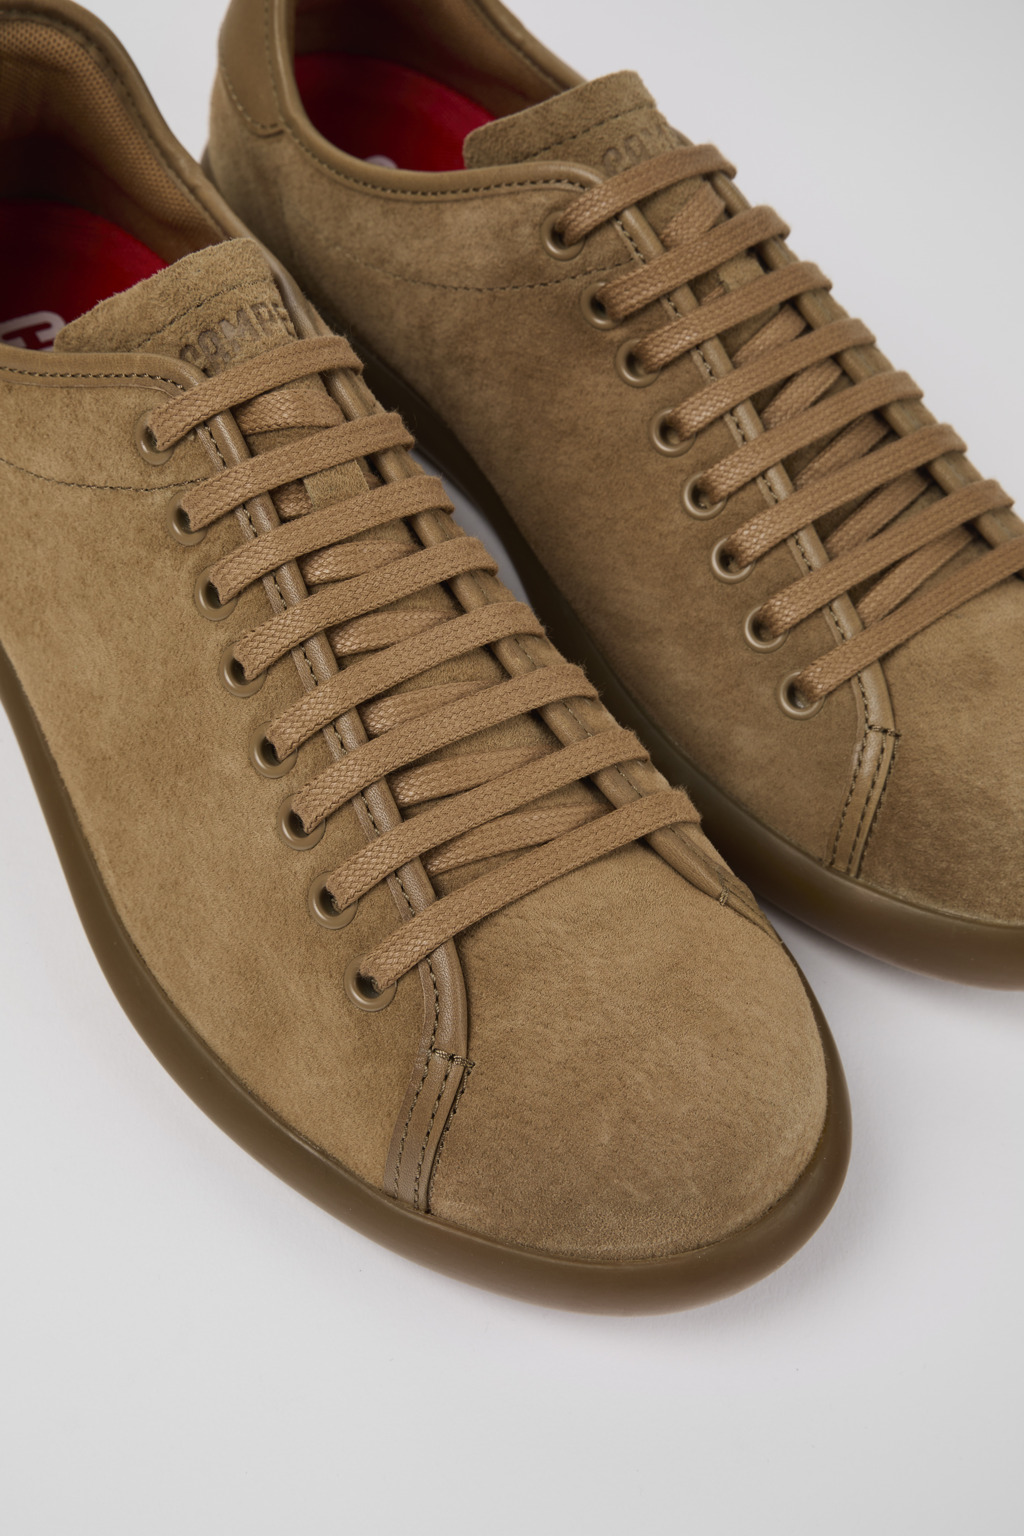 Pelotas Brown Sneakers for Men - Fall/Winter collection - Camper 